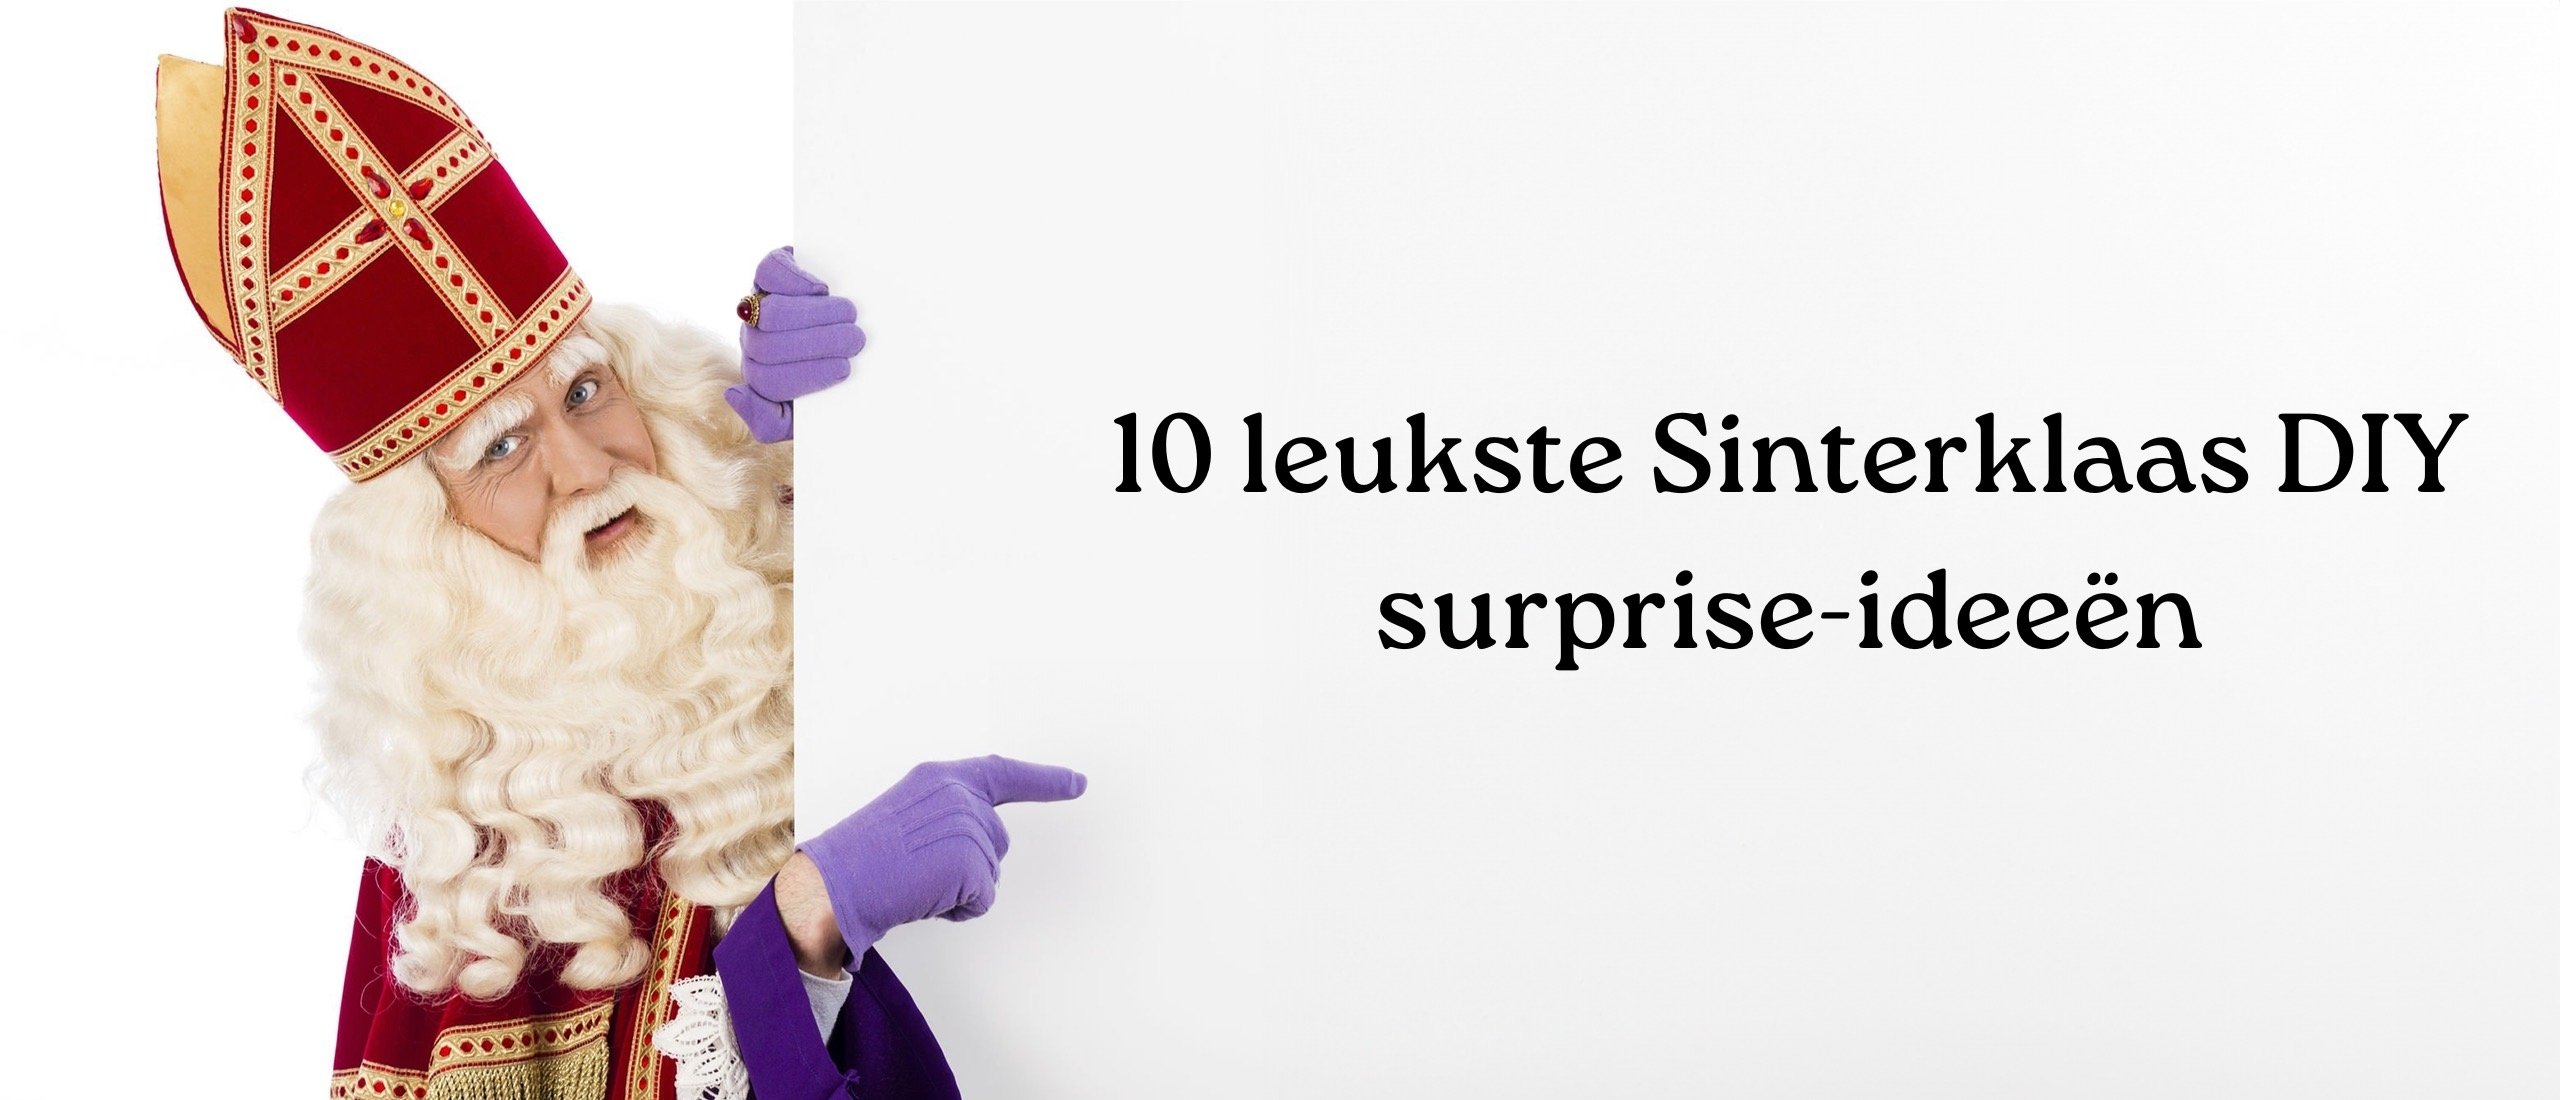 10 leukste Sinterklaas DIY surprise-ideeën blog header Knutselclub.nl